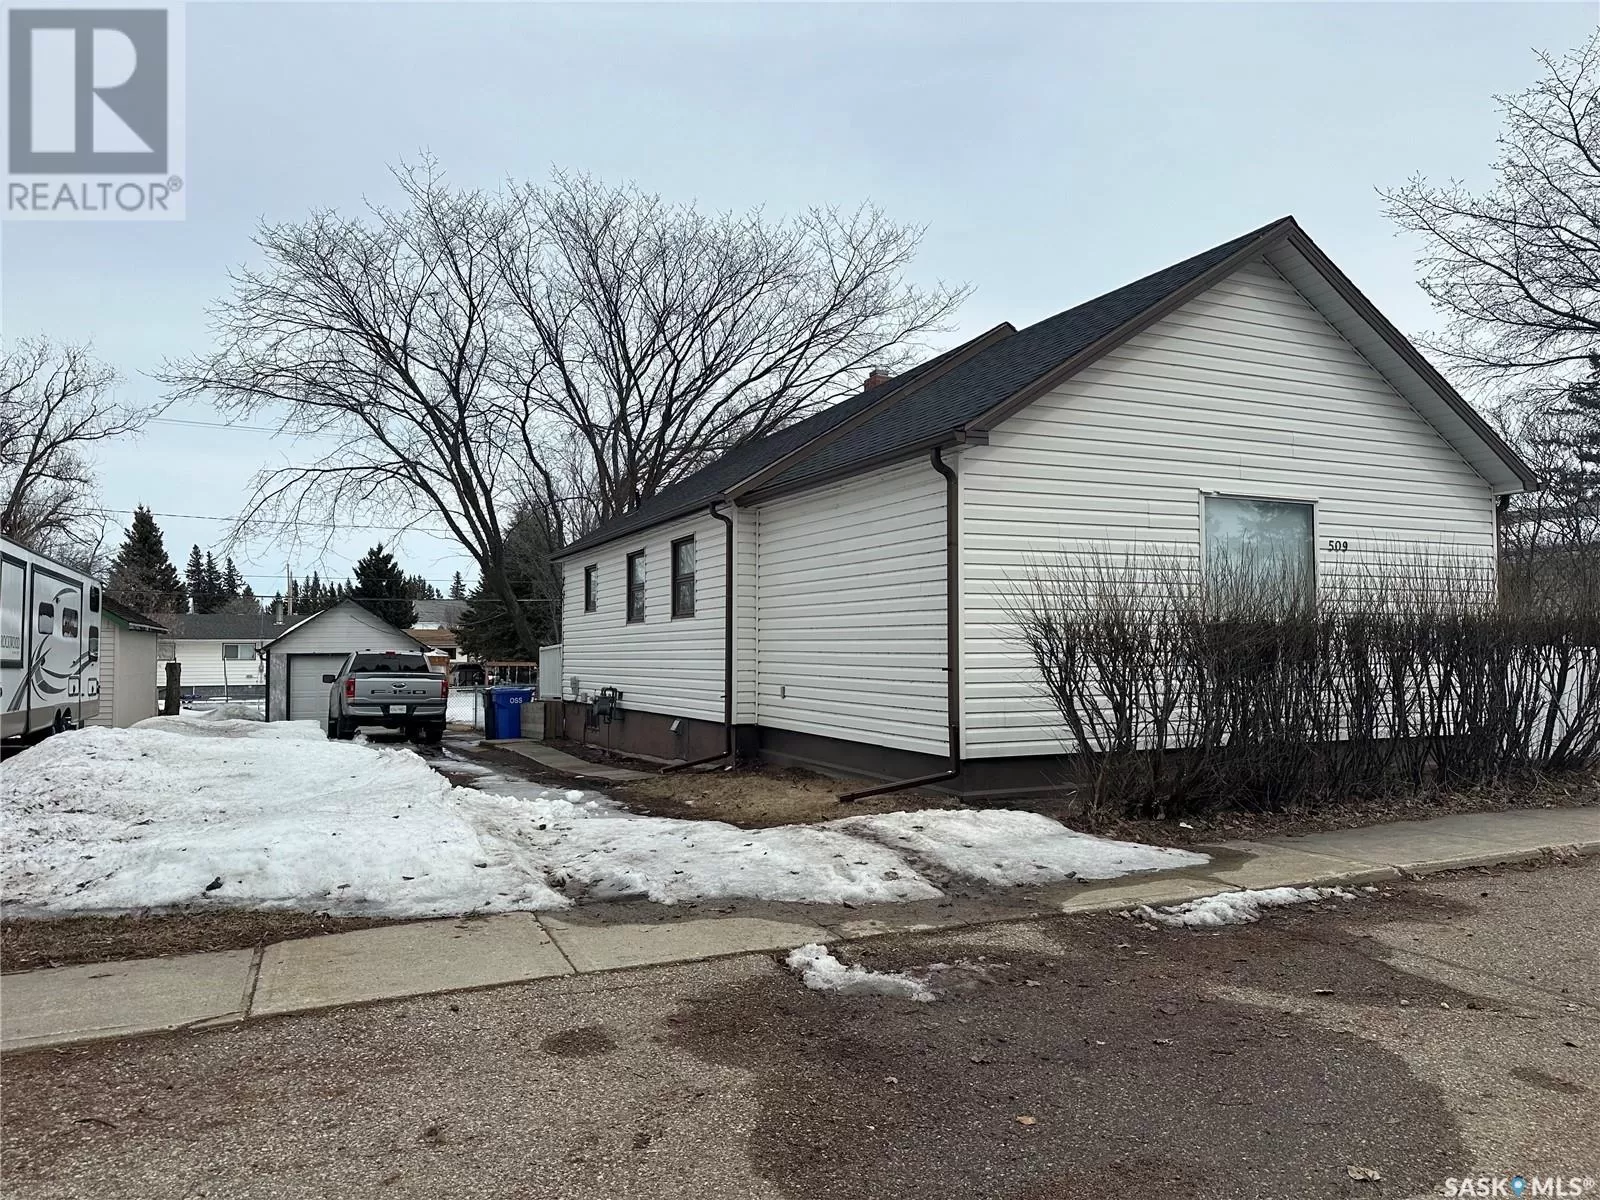 House for rent: 509 Railway Avenue, Springside, Saskatchewan S0A 3V0